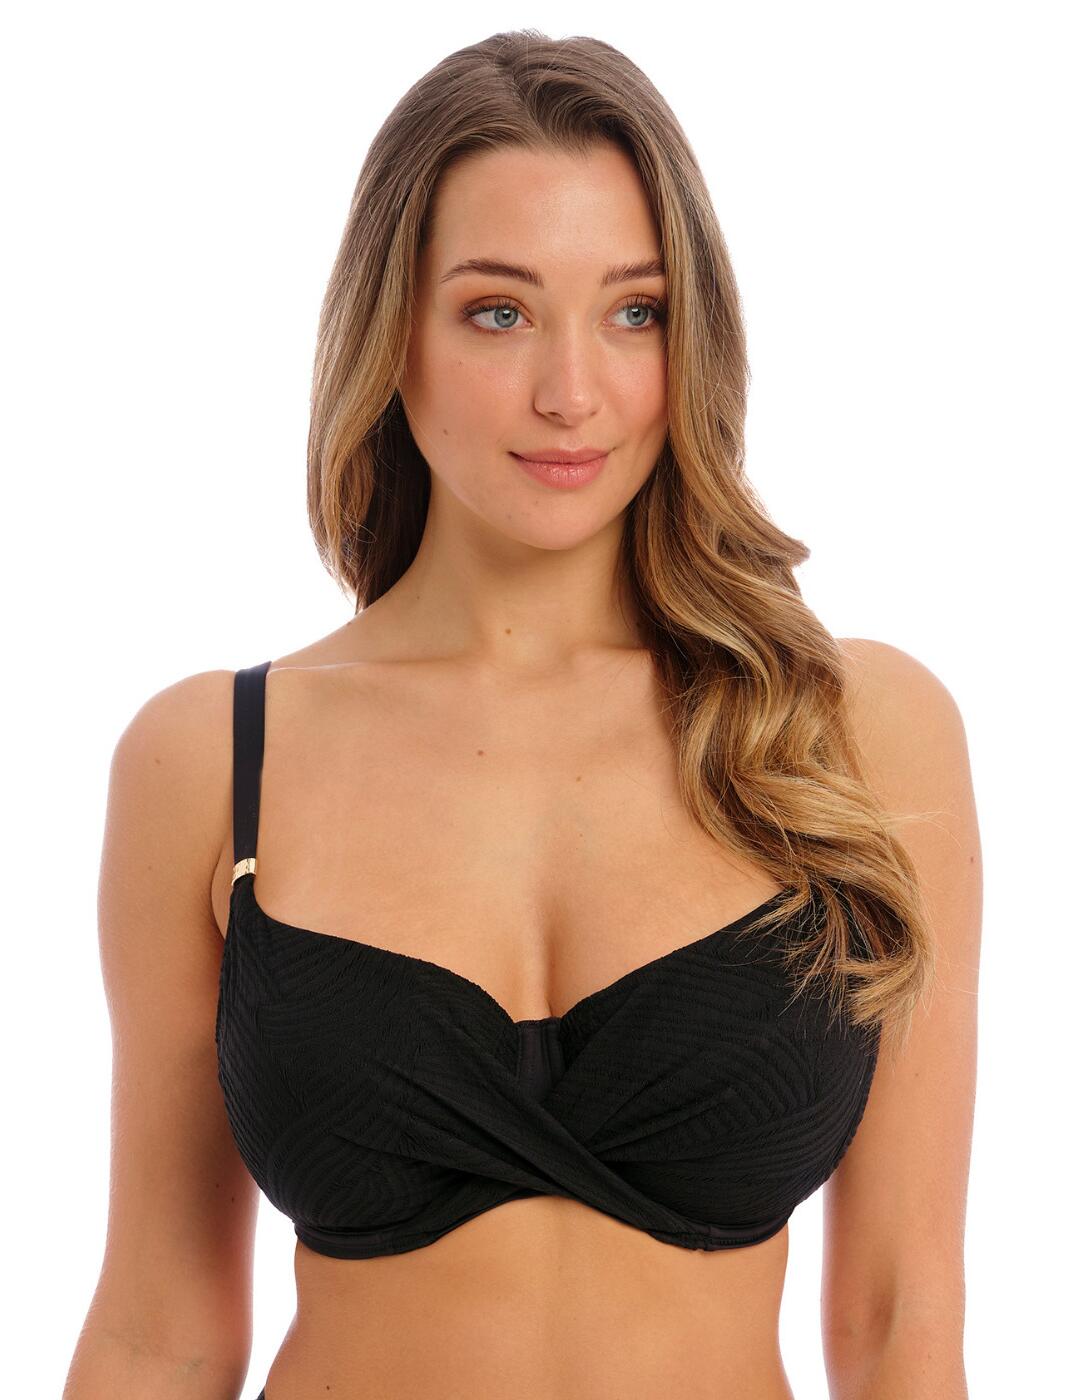 Fantasie Women's Ottawa Plunge Bikini Top - FS6495 32D Black